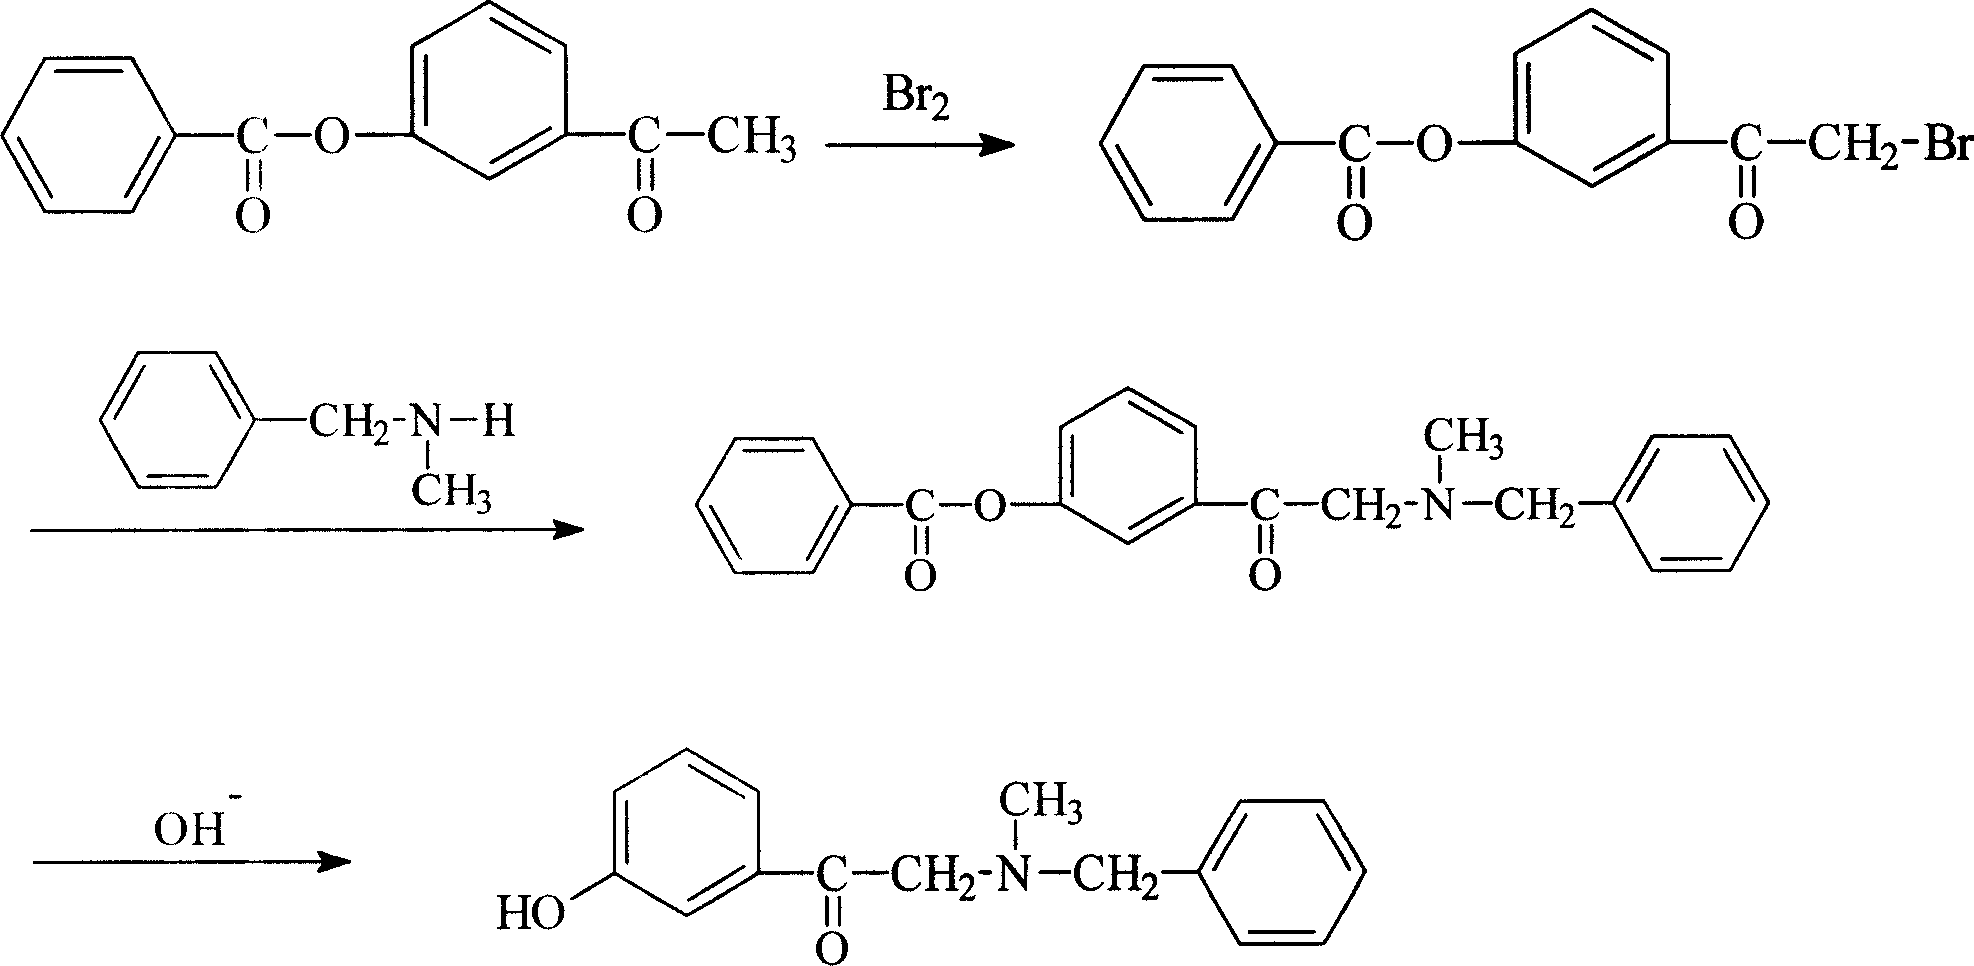 Process of synthesizing alpha-(N-methyl-N-benzylamin)-3-hydroxy acetophenone hydrochloride